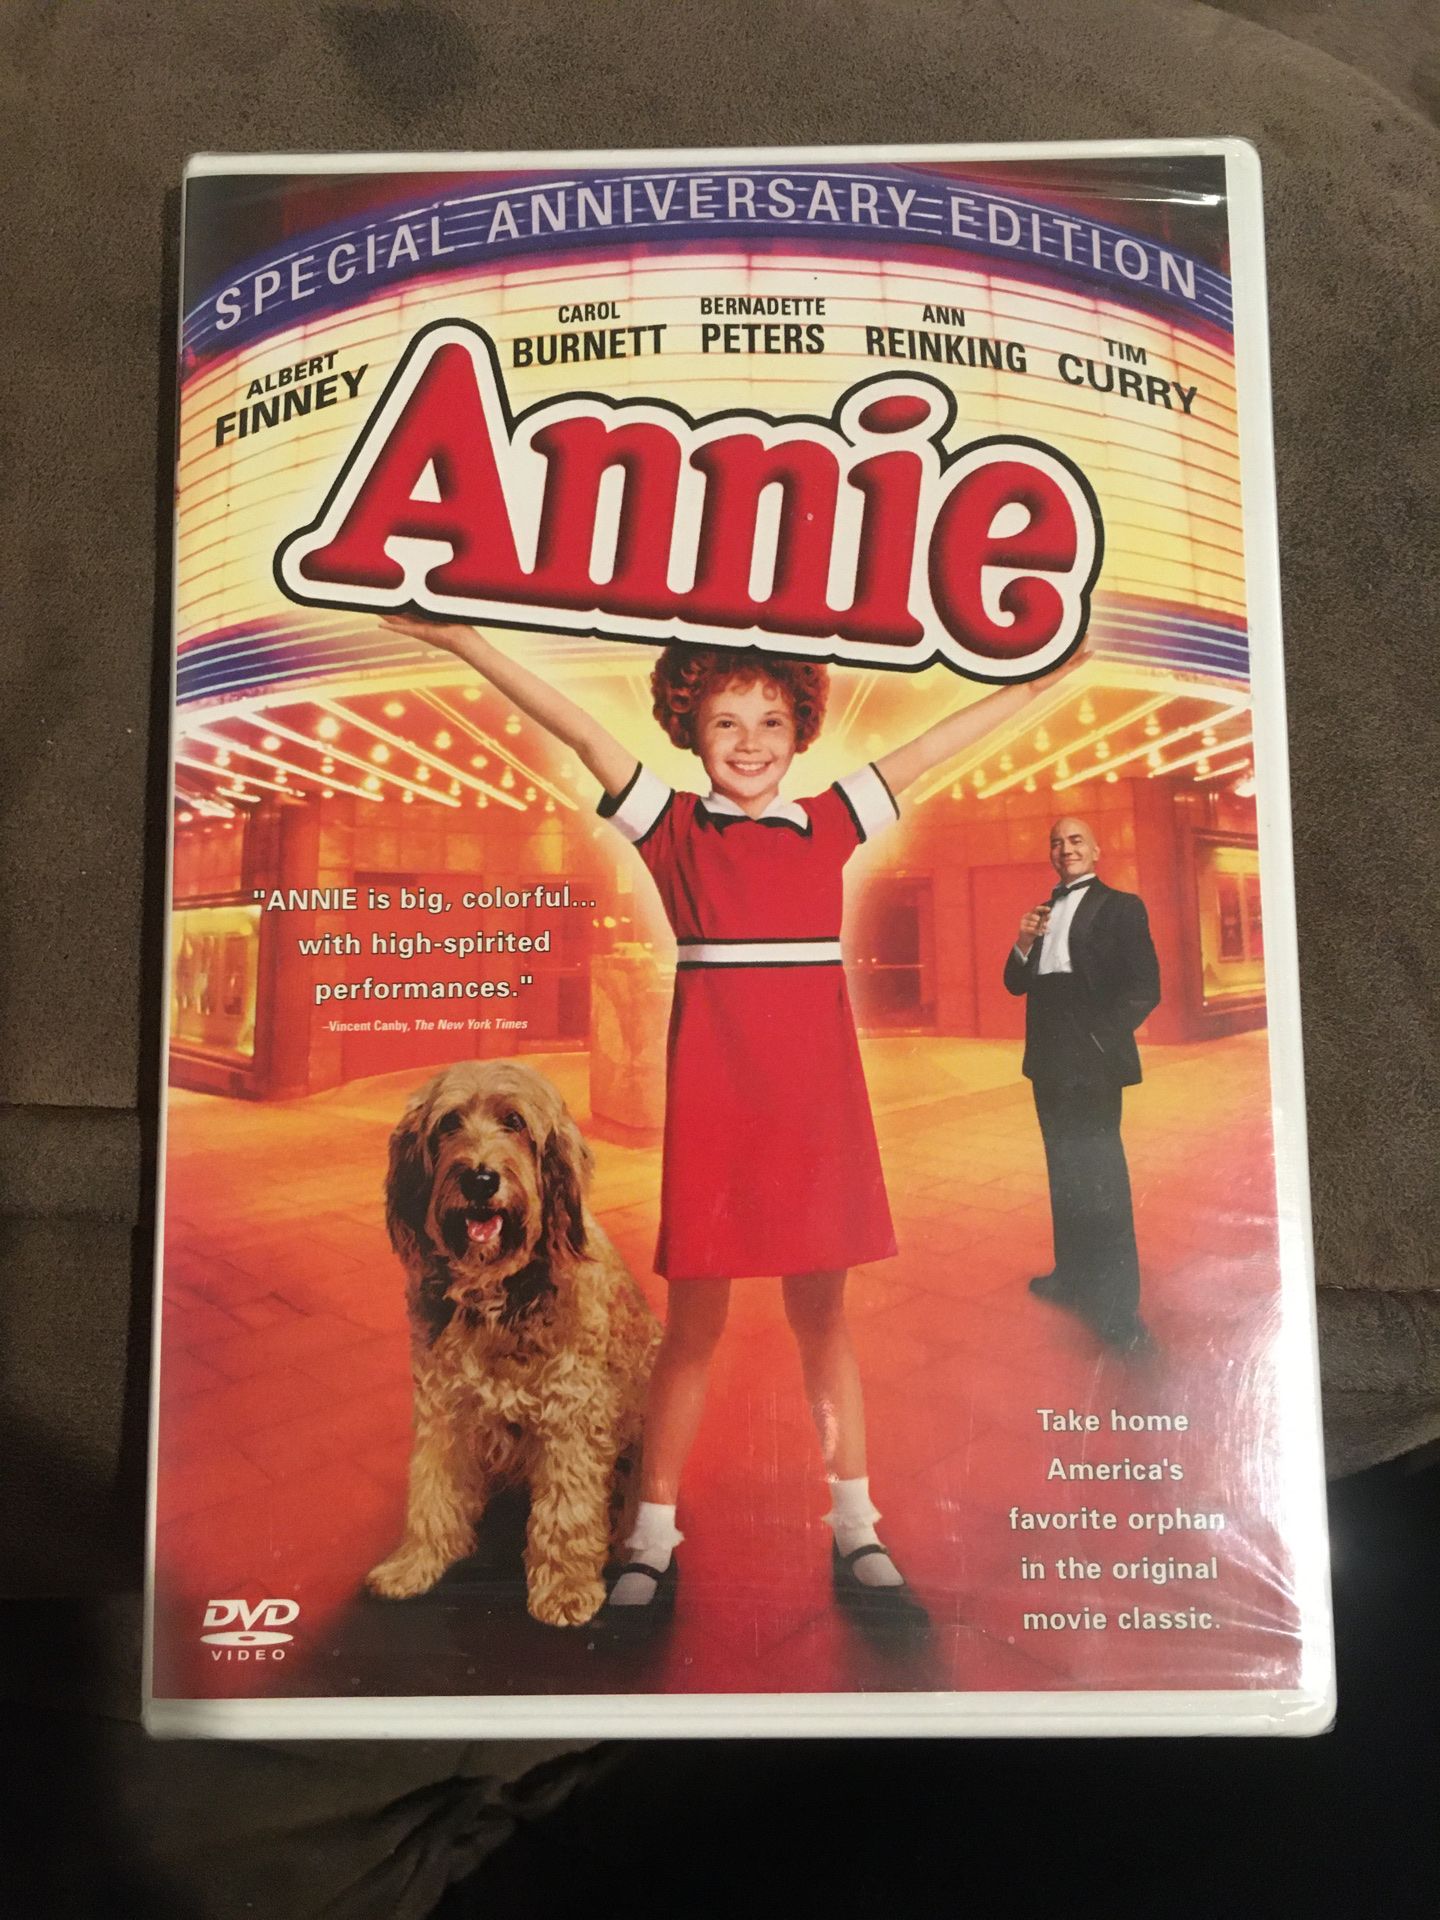 Annie Movie - Special Anniversary Edition DVD